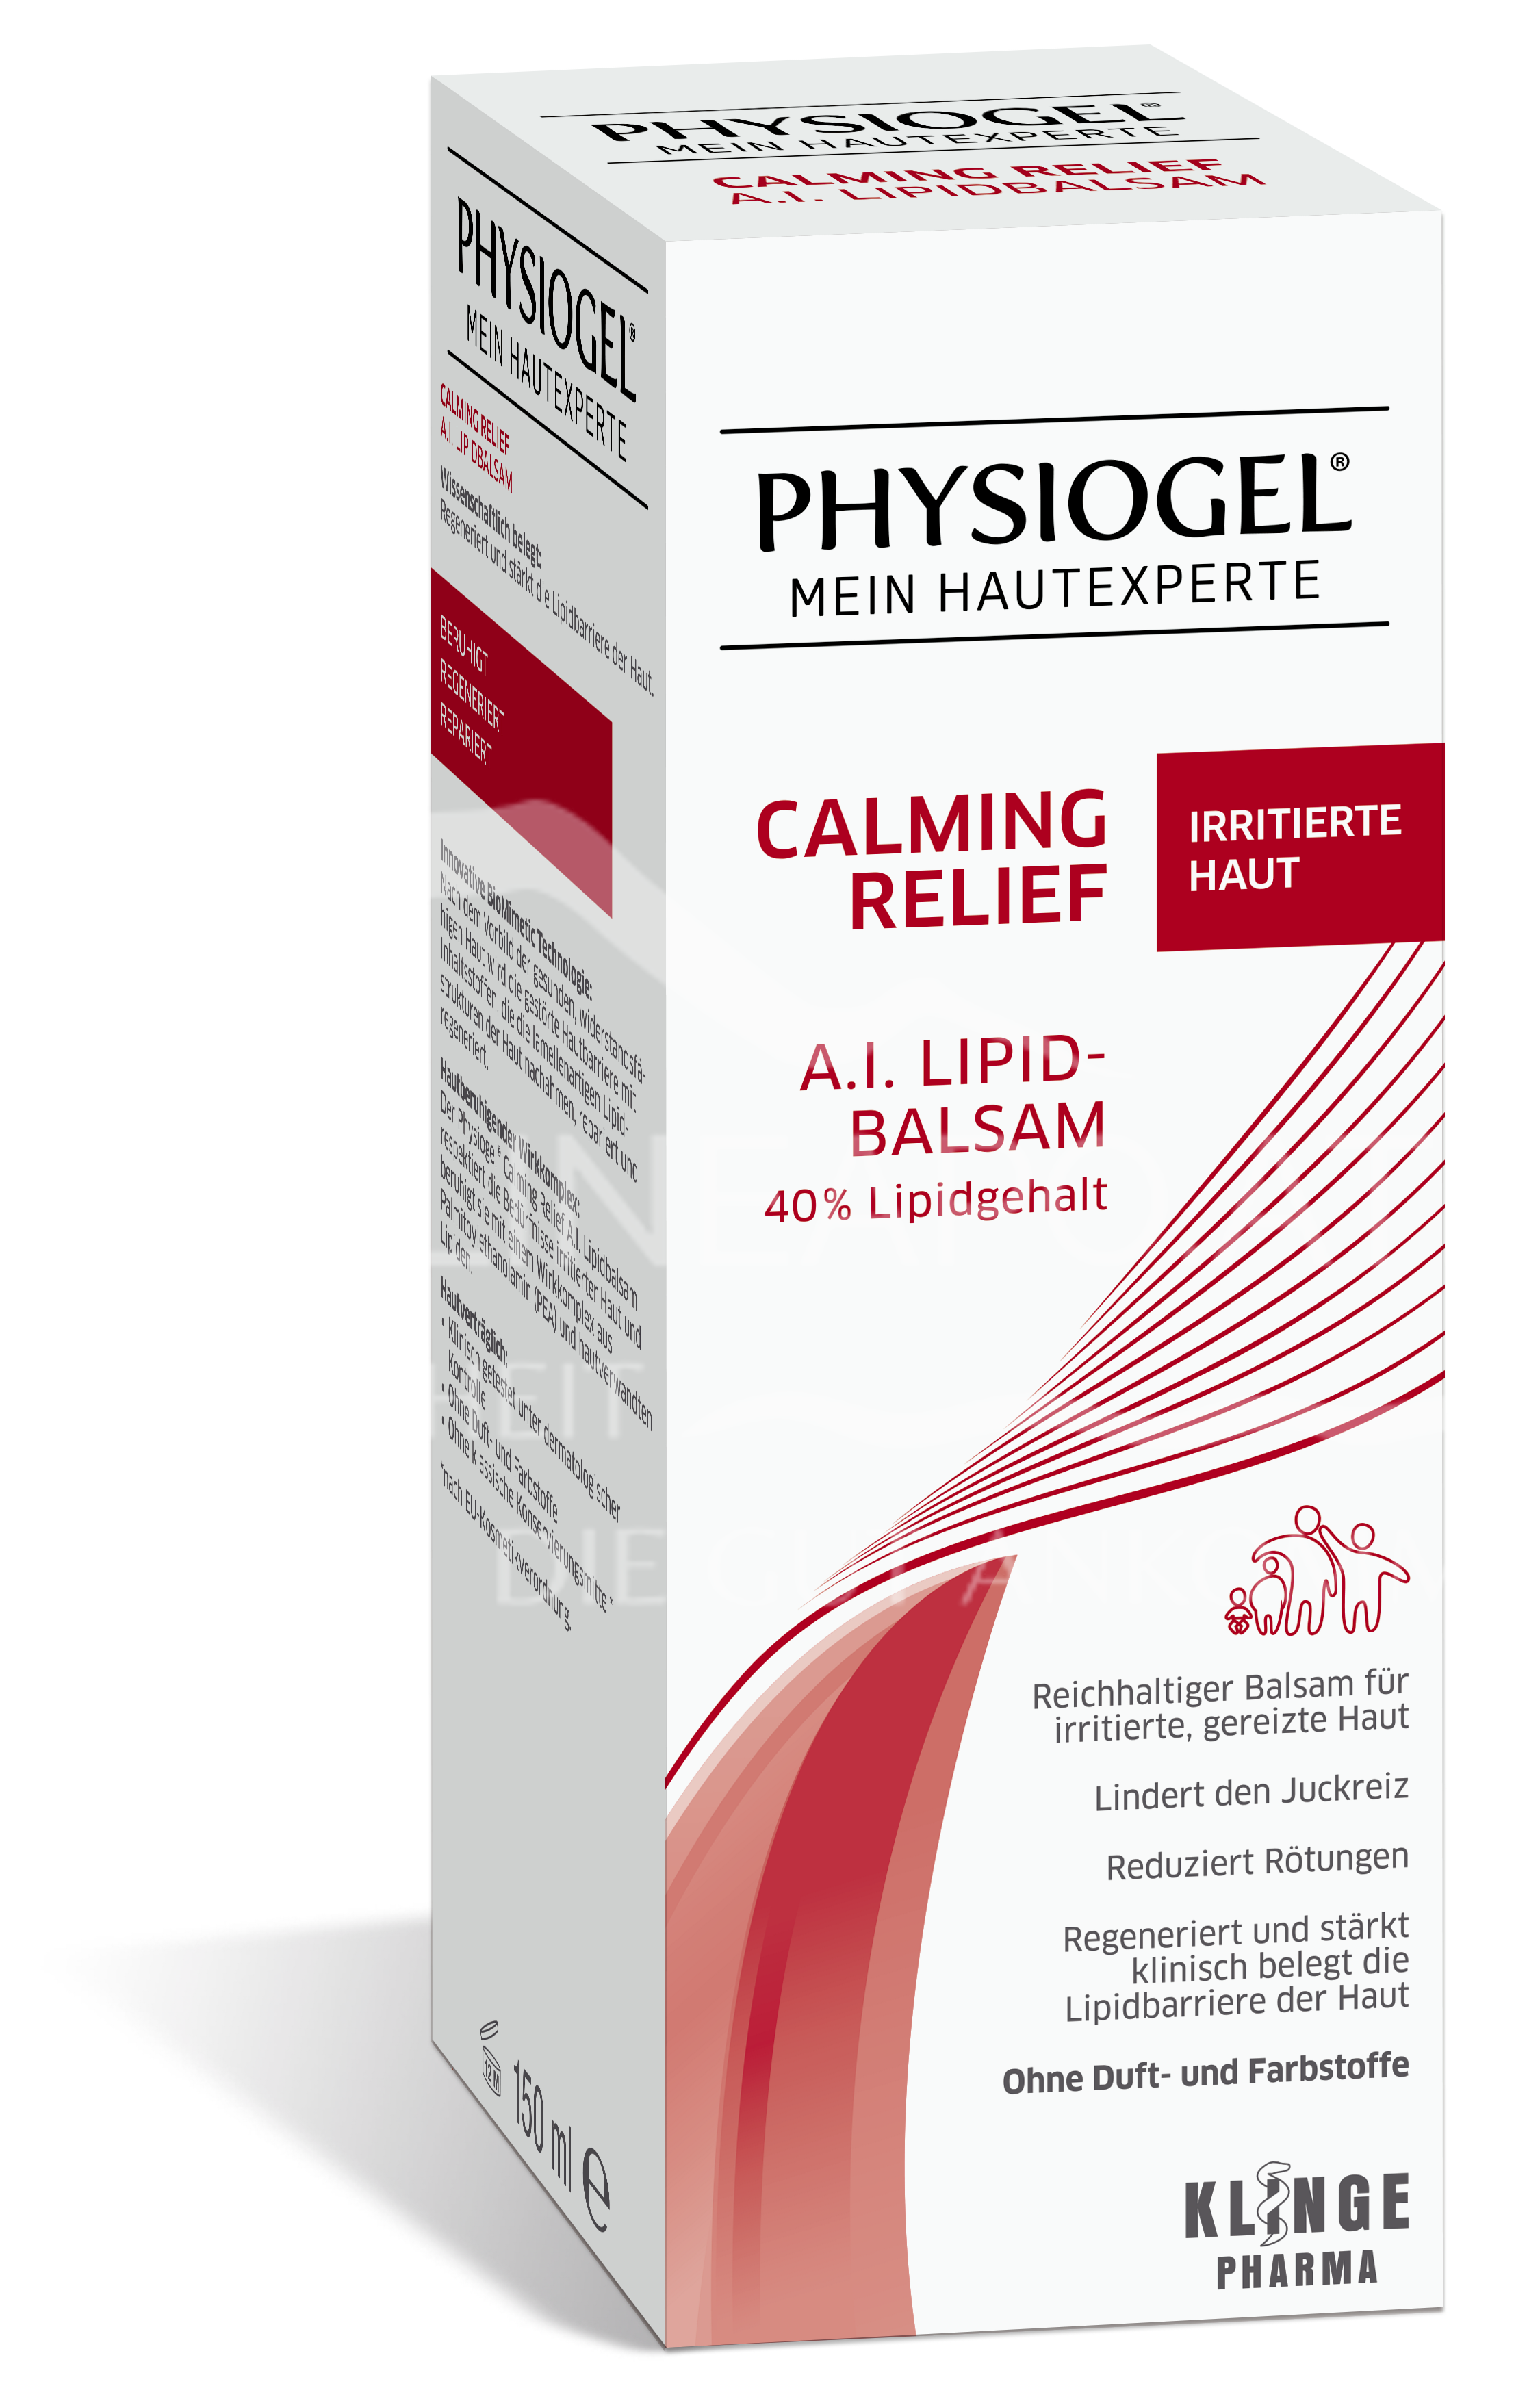 Physiogel® Calming Relief A.I. Lipidbalsam - Irritierte Haut